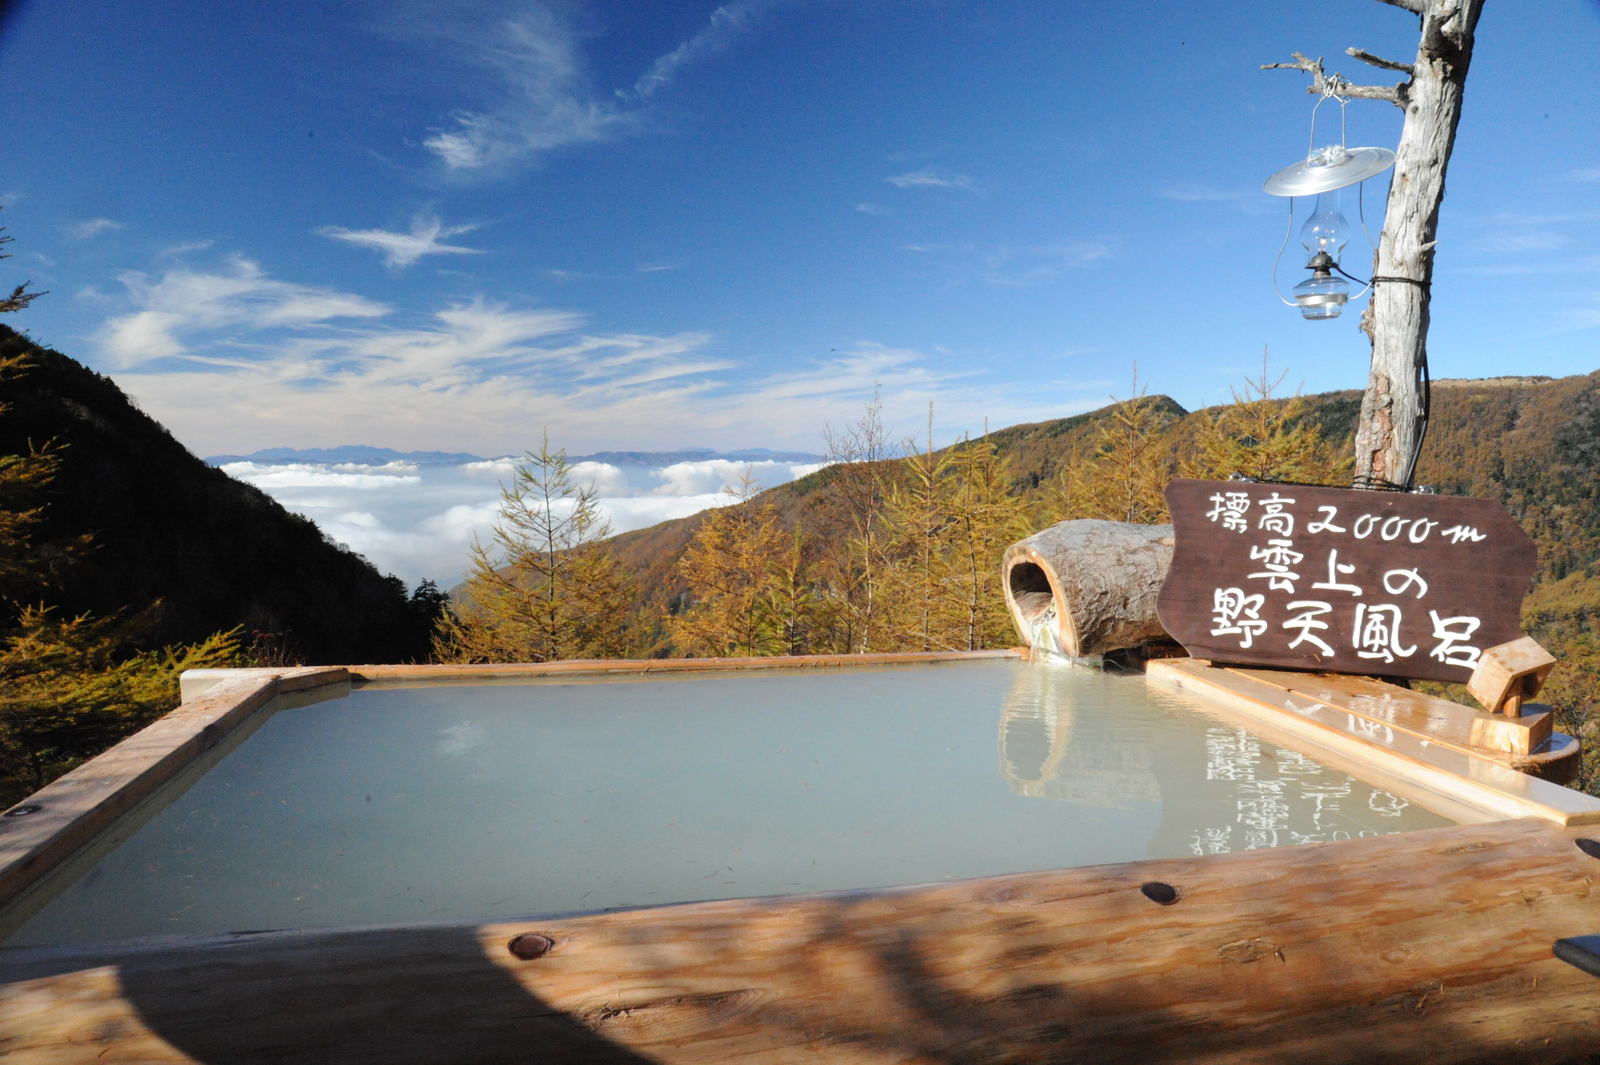 The Highest Hot Springs in Japan